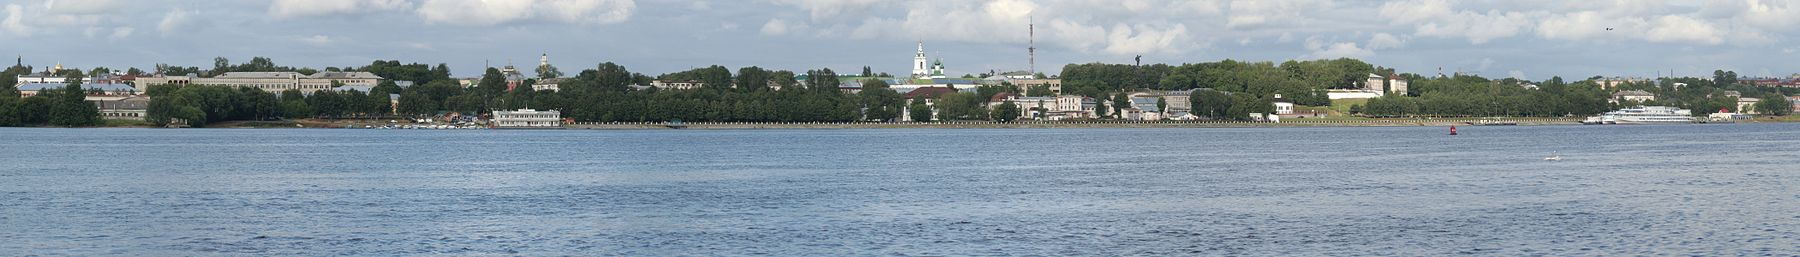 Kostroma Wikivoyage banner.jpg